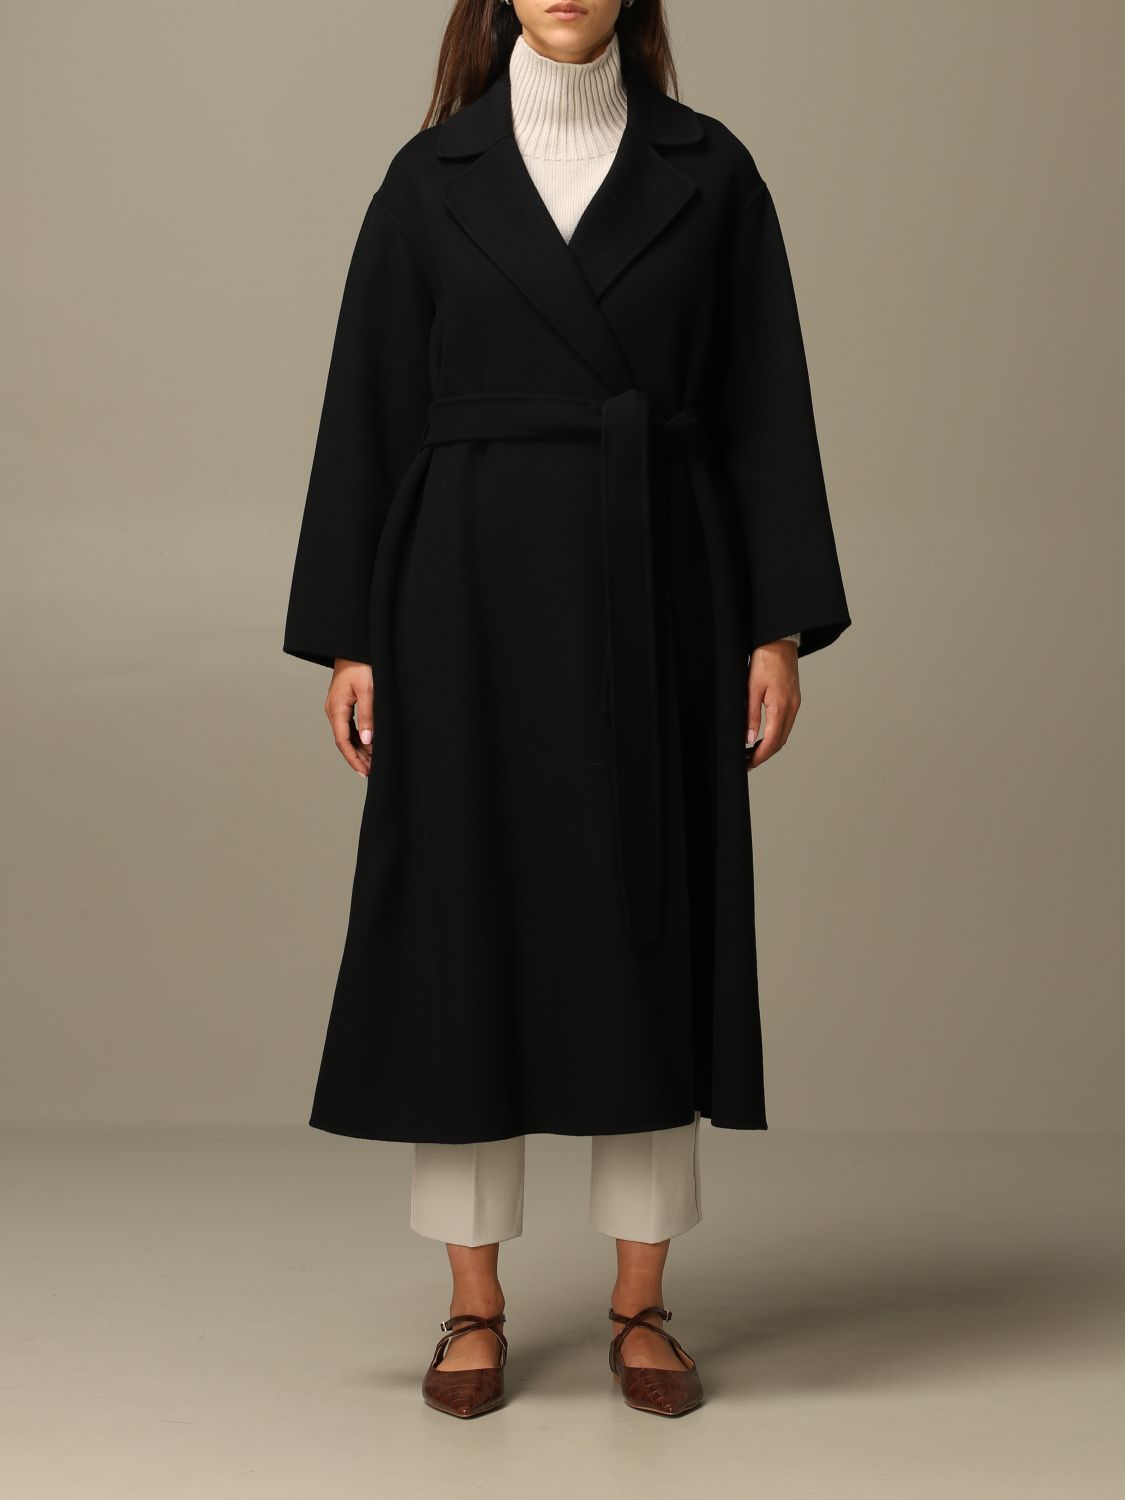 S MAX MARA: Elena coat in virgin wool - Black | S Max Mara coat ...